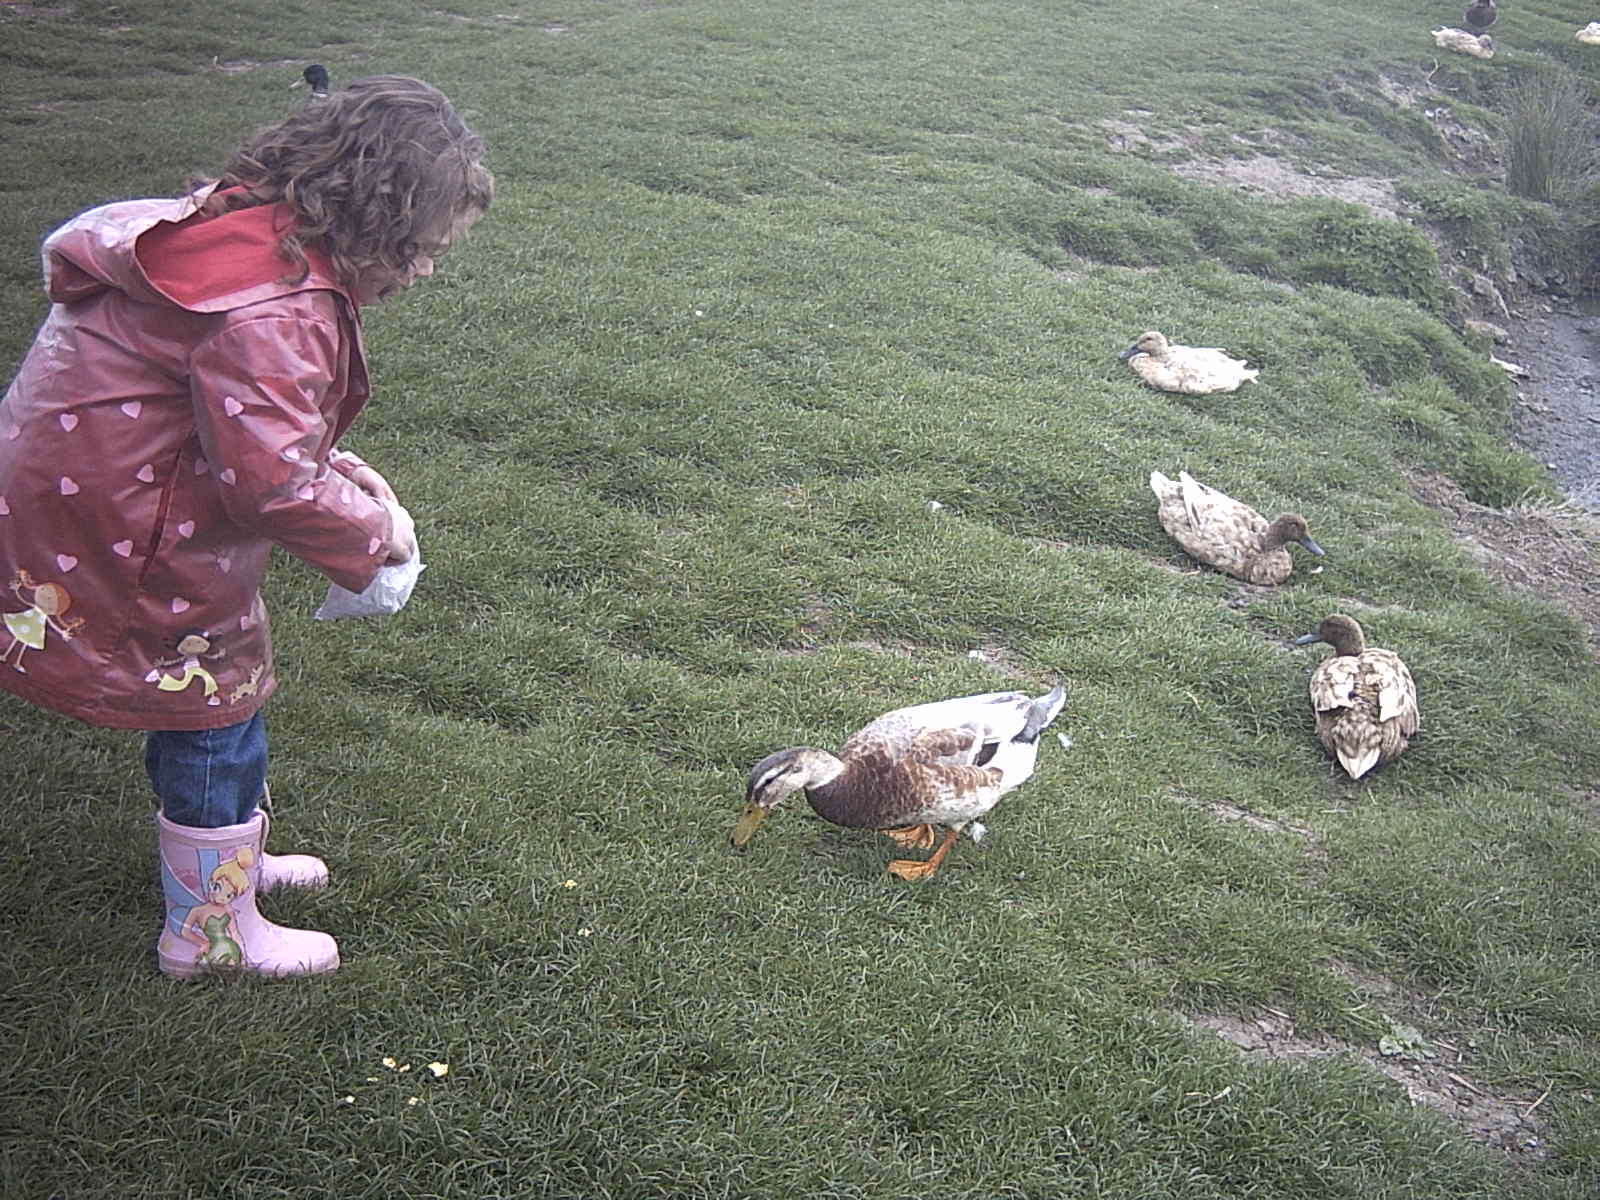 File:Feeding the ducks.jpg - Wikipedia